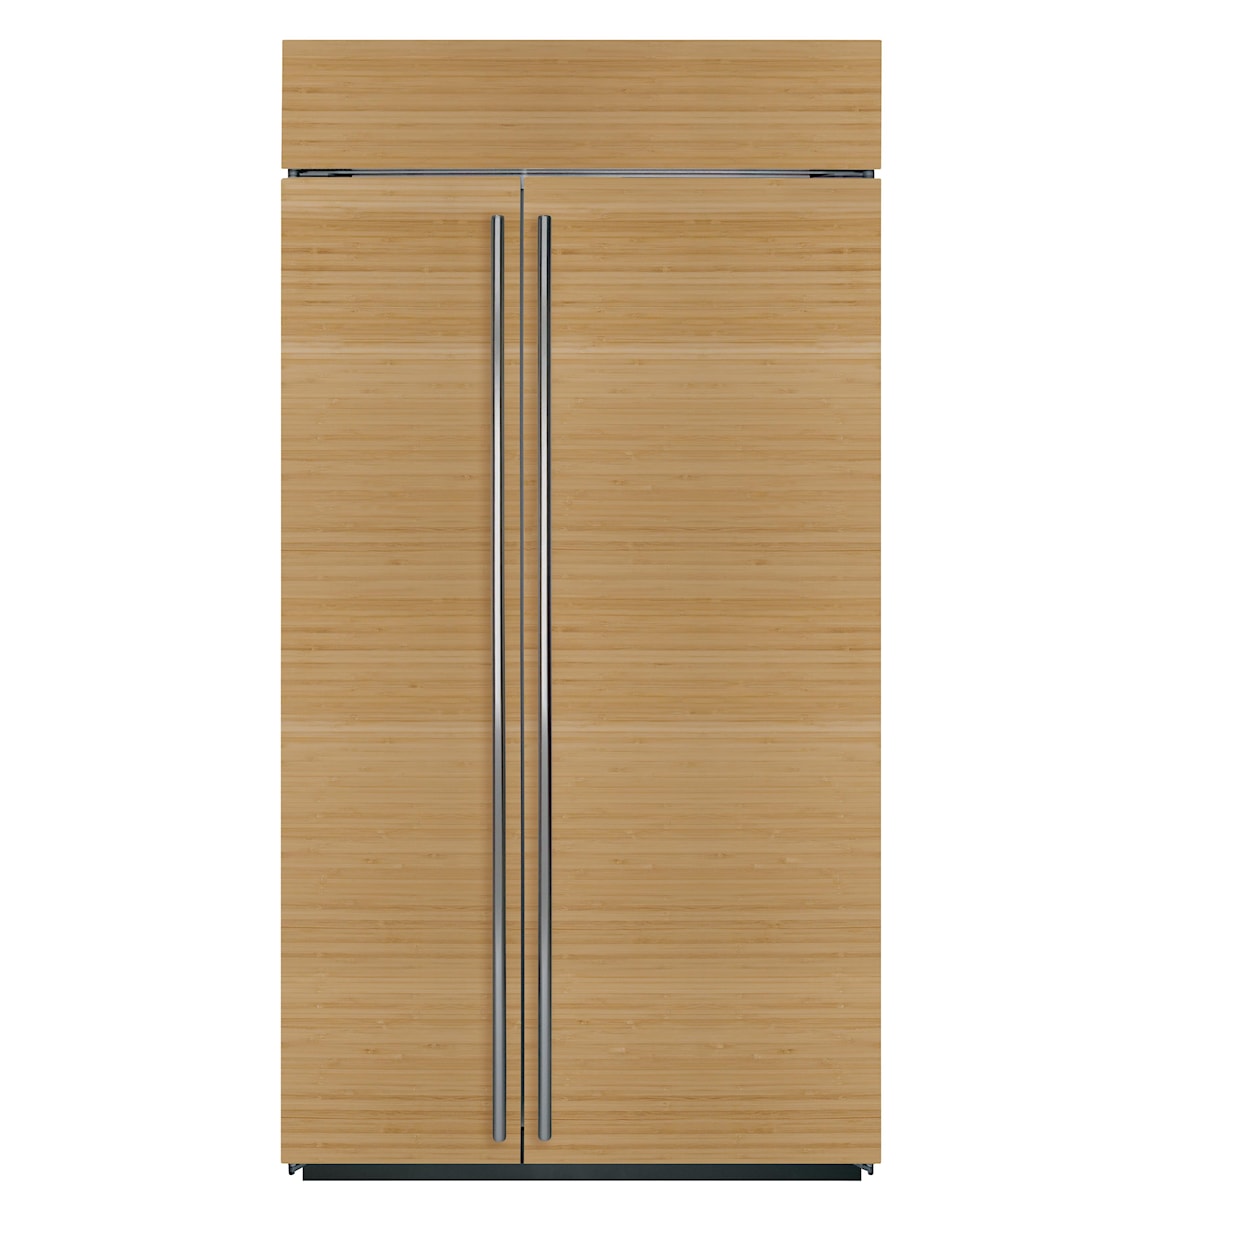 Sub-Zero Built-In Refrigeration 42" Side-by-Side Refrigerator